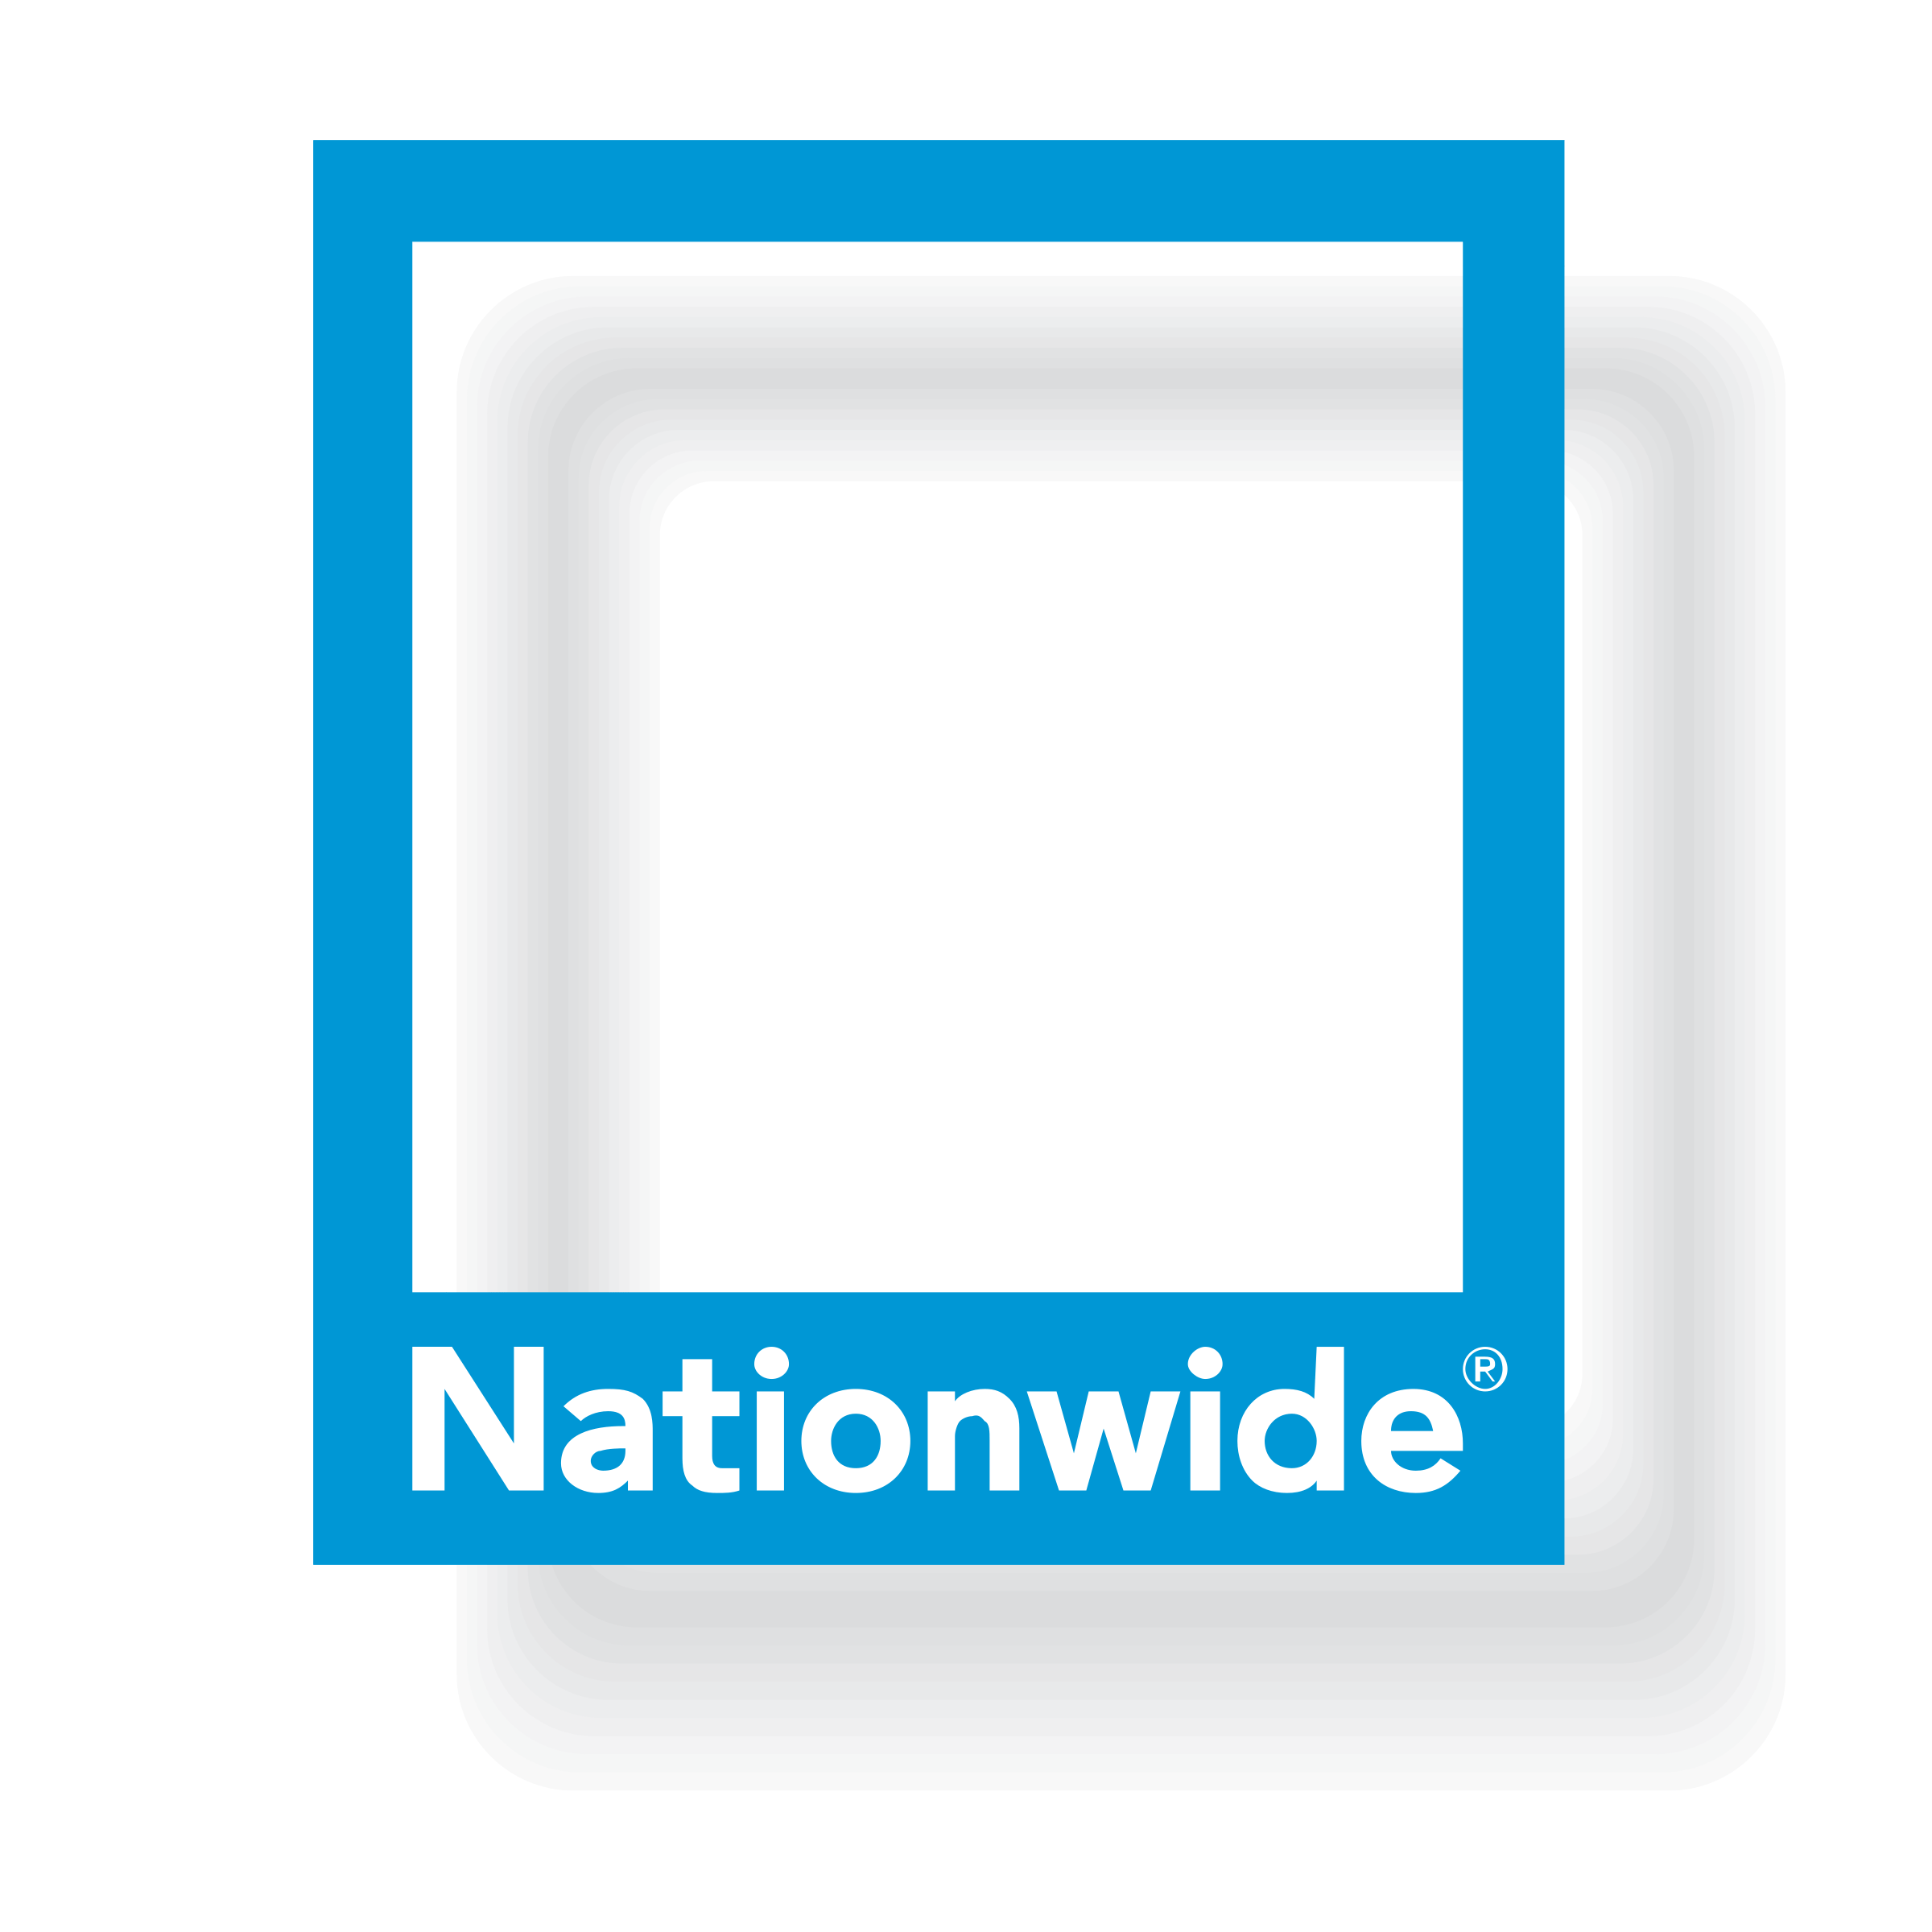 Nationwide Logo - Nationwide Logo PNG Transparent & SVG Vector - Freebie Supply